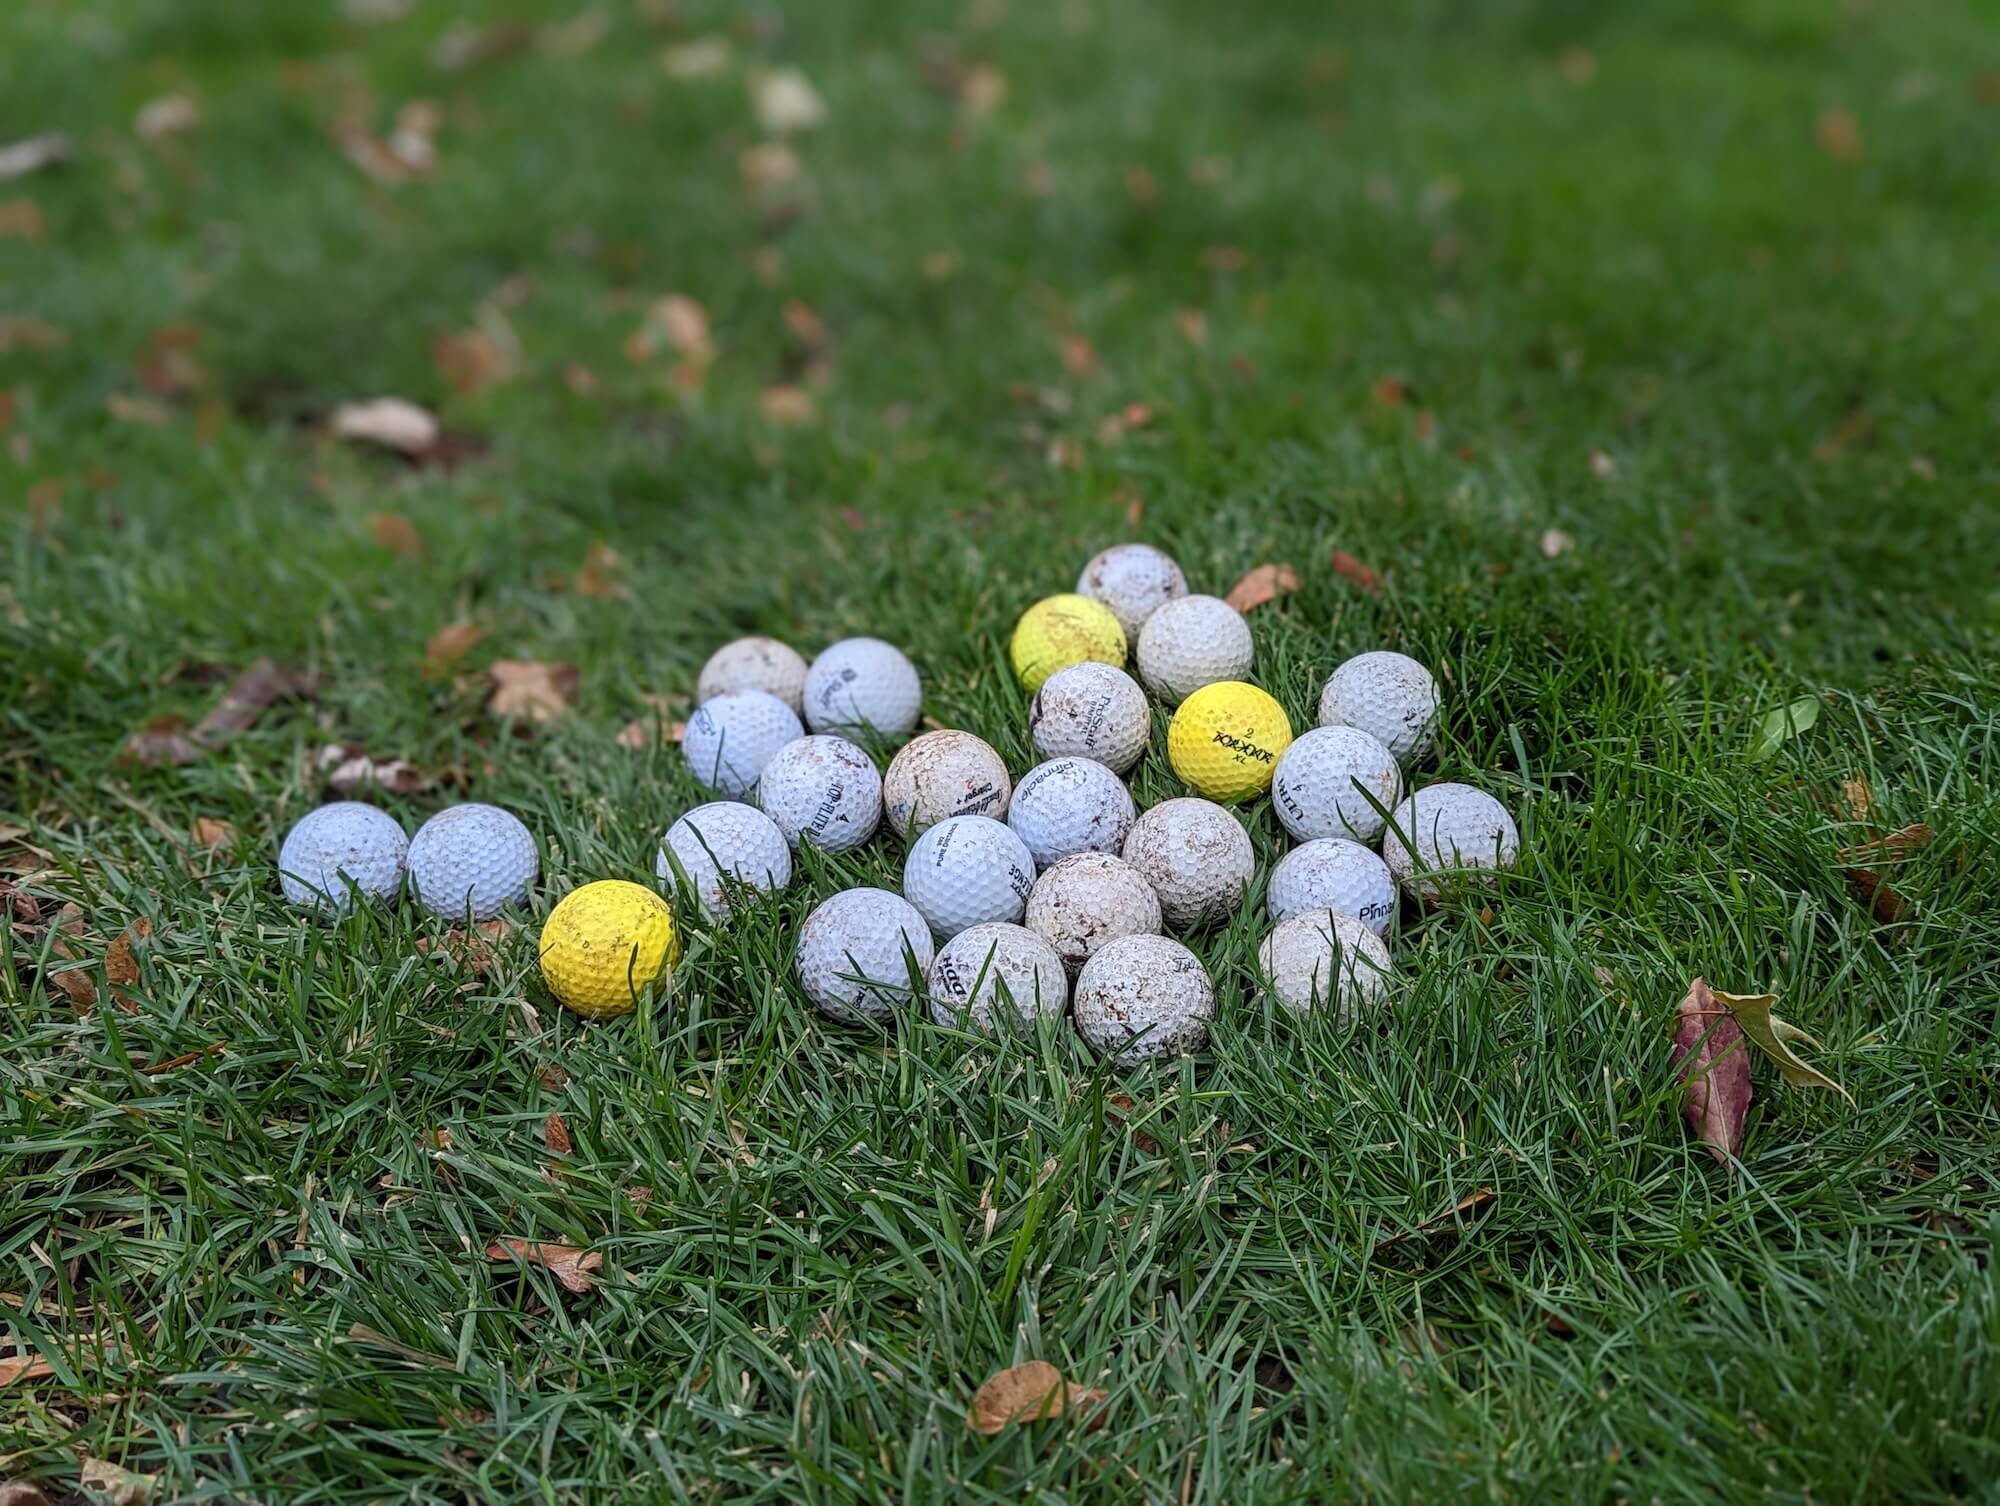 used golf balls